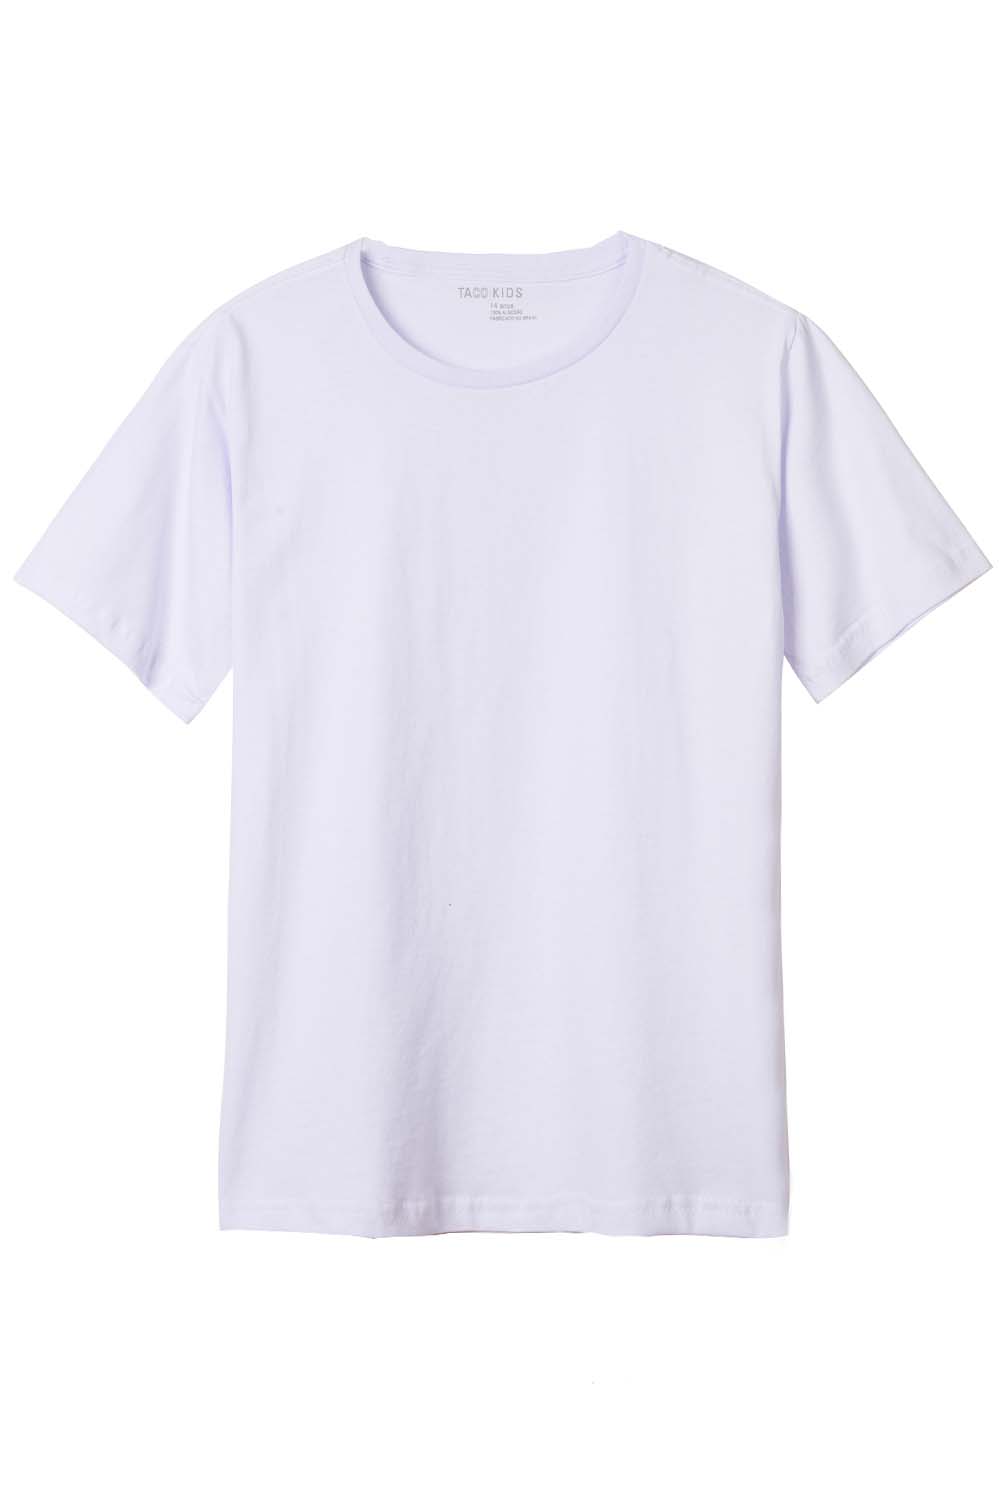 T-Shirt Criança Branca - M5873  Brinde & Companhia - Brindes